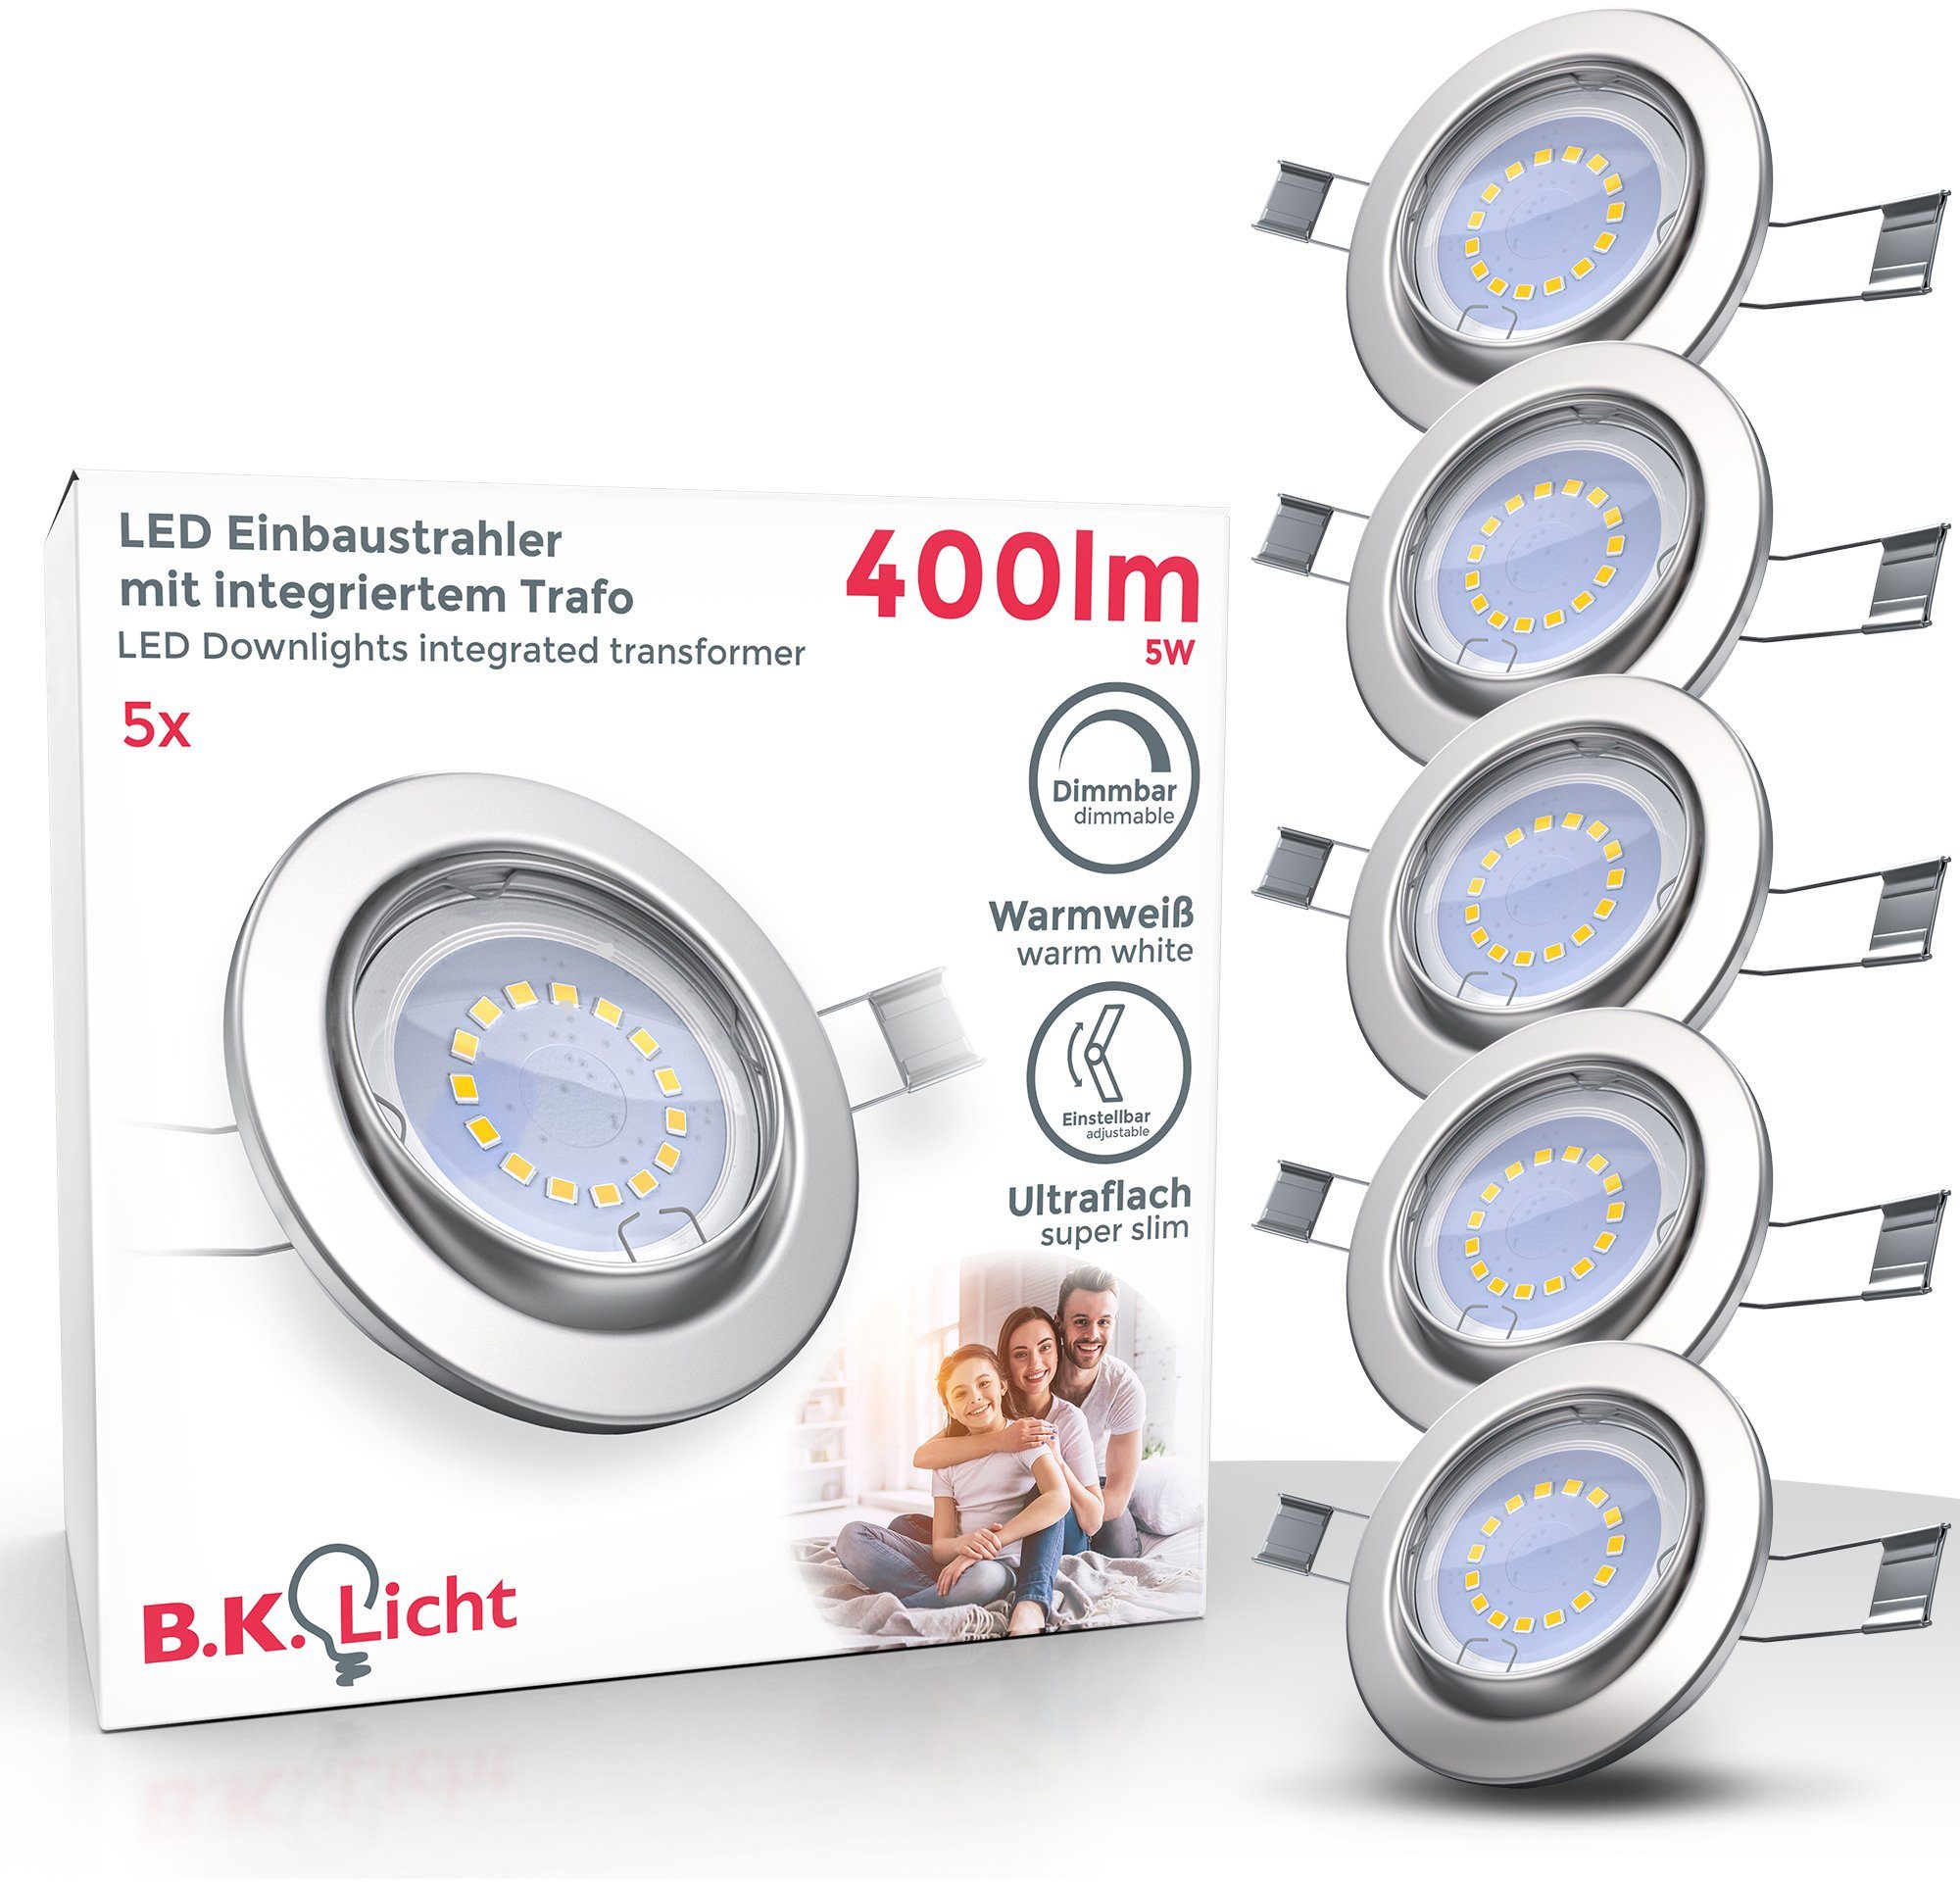 B.K.Licht LED Einbauleuchte, LED dimmbar, 5W LED ohne Einbaustrahler, Warmweiß, Dimmer wechselbar, 5er inkl. 400lm SET GU10